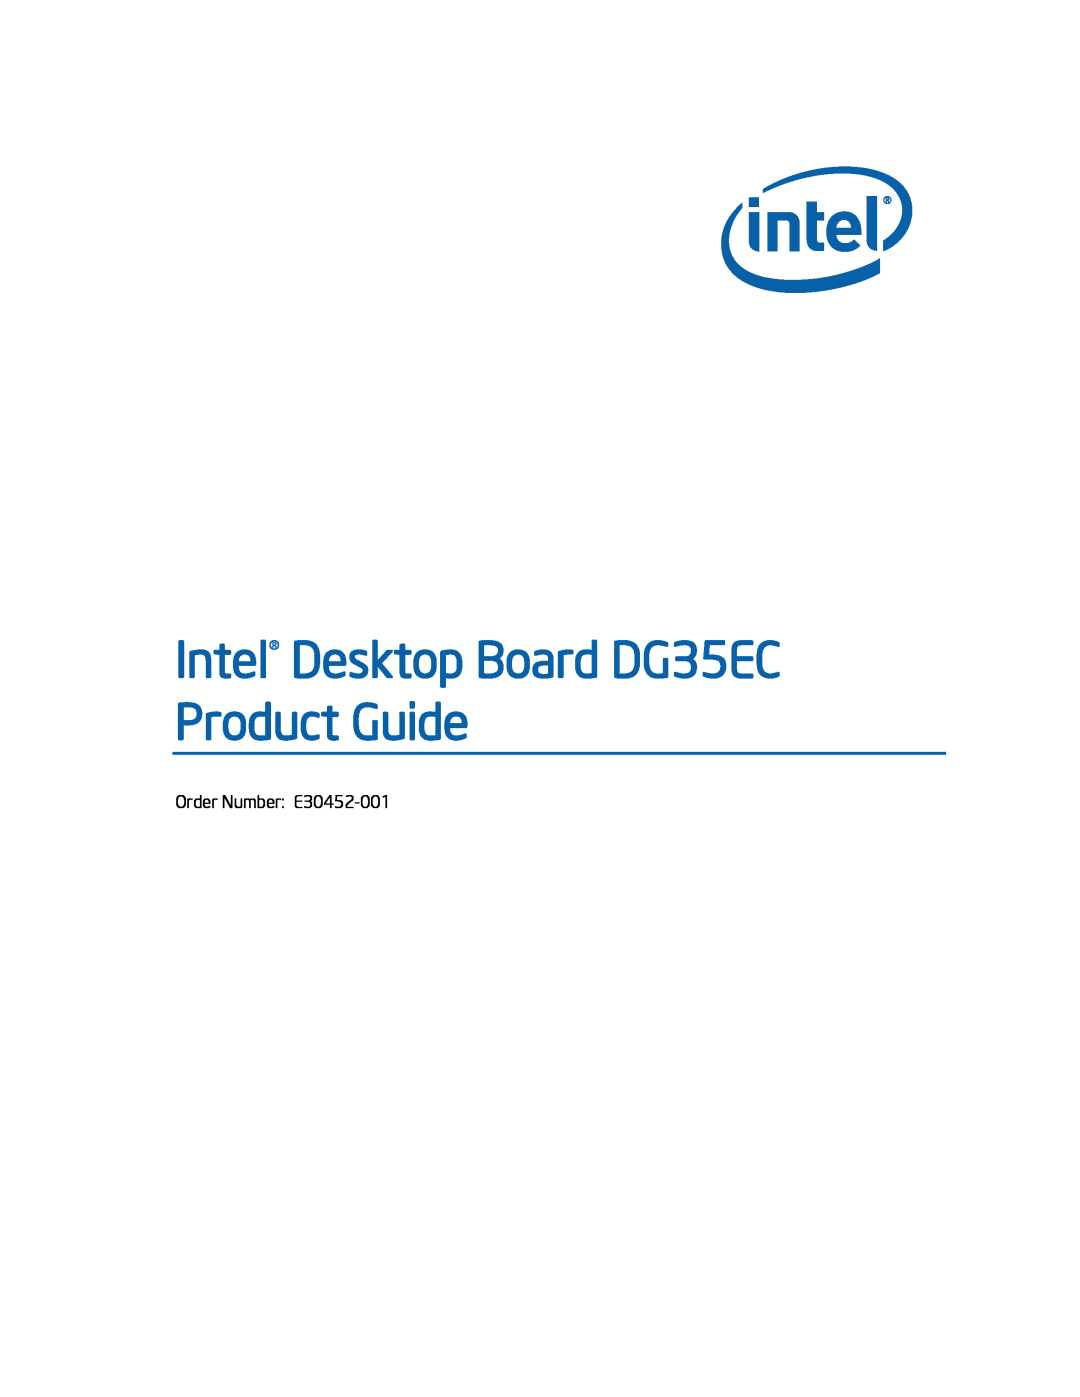 Intel manual Intel Desktop Board DG35EC Product Guide, Order Number E30452-001 